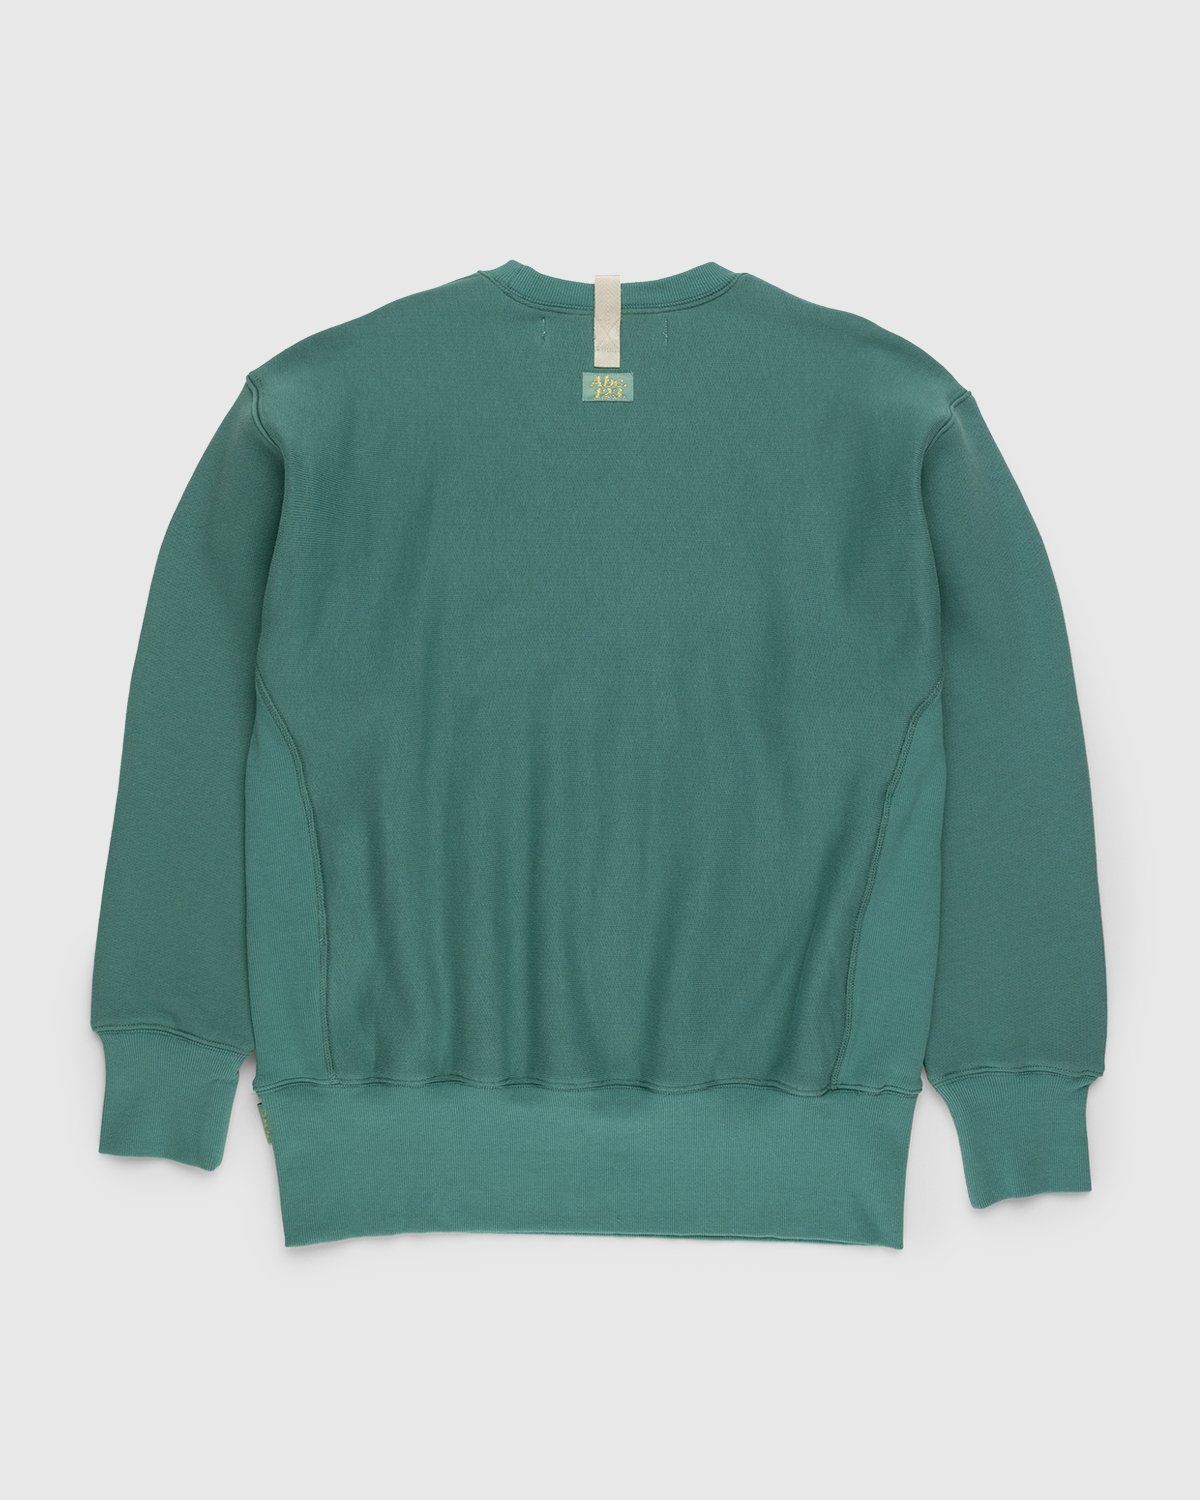 Abc. – French Terry Crewneck Sweatshirt Apatite - Sweats - Green - Image 2